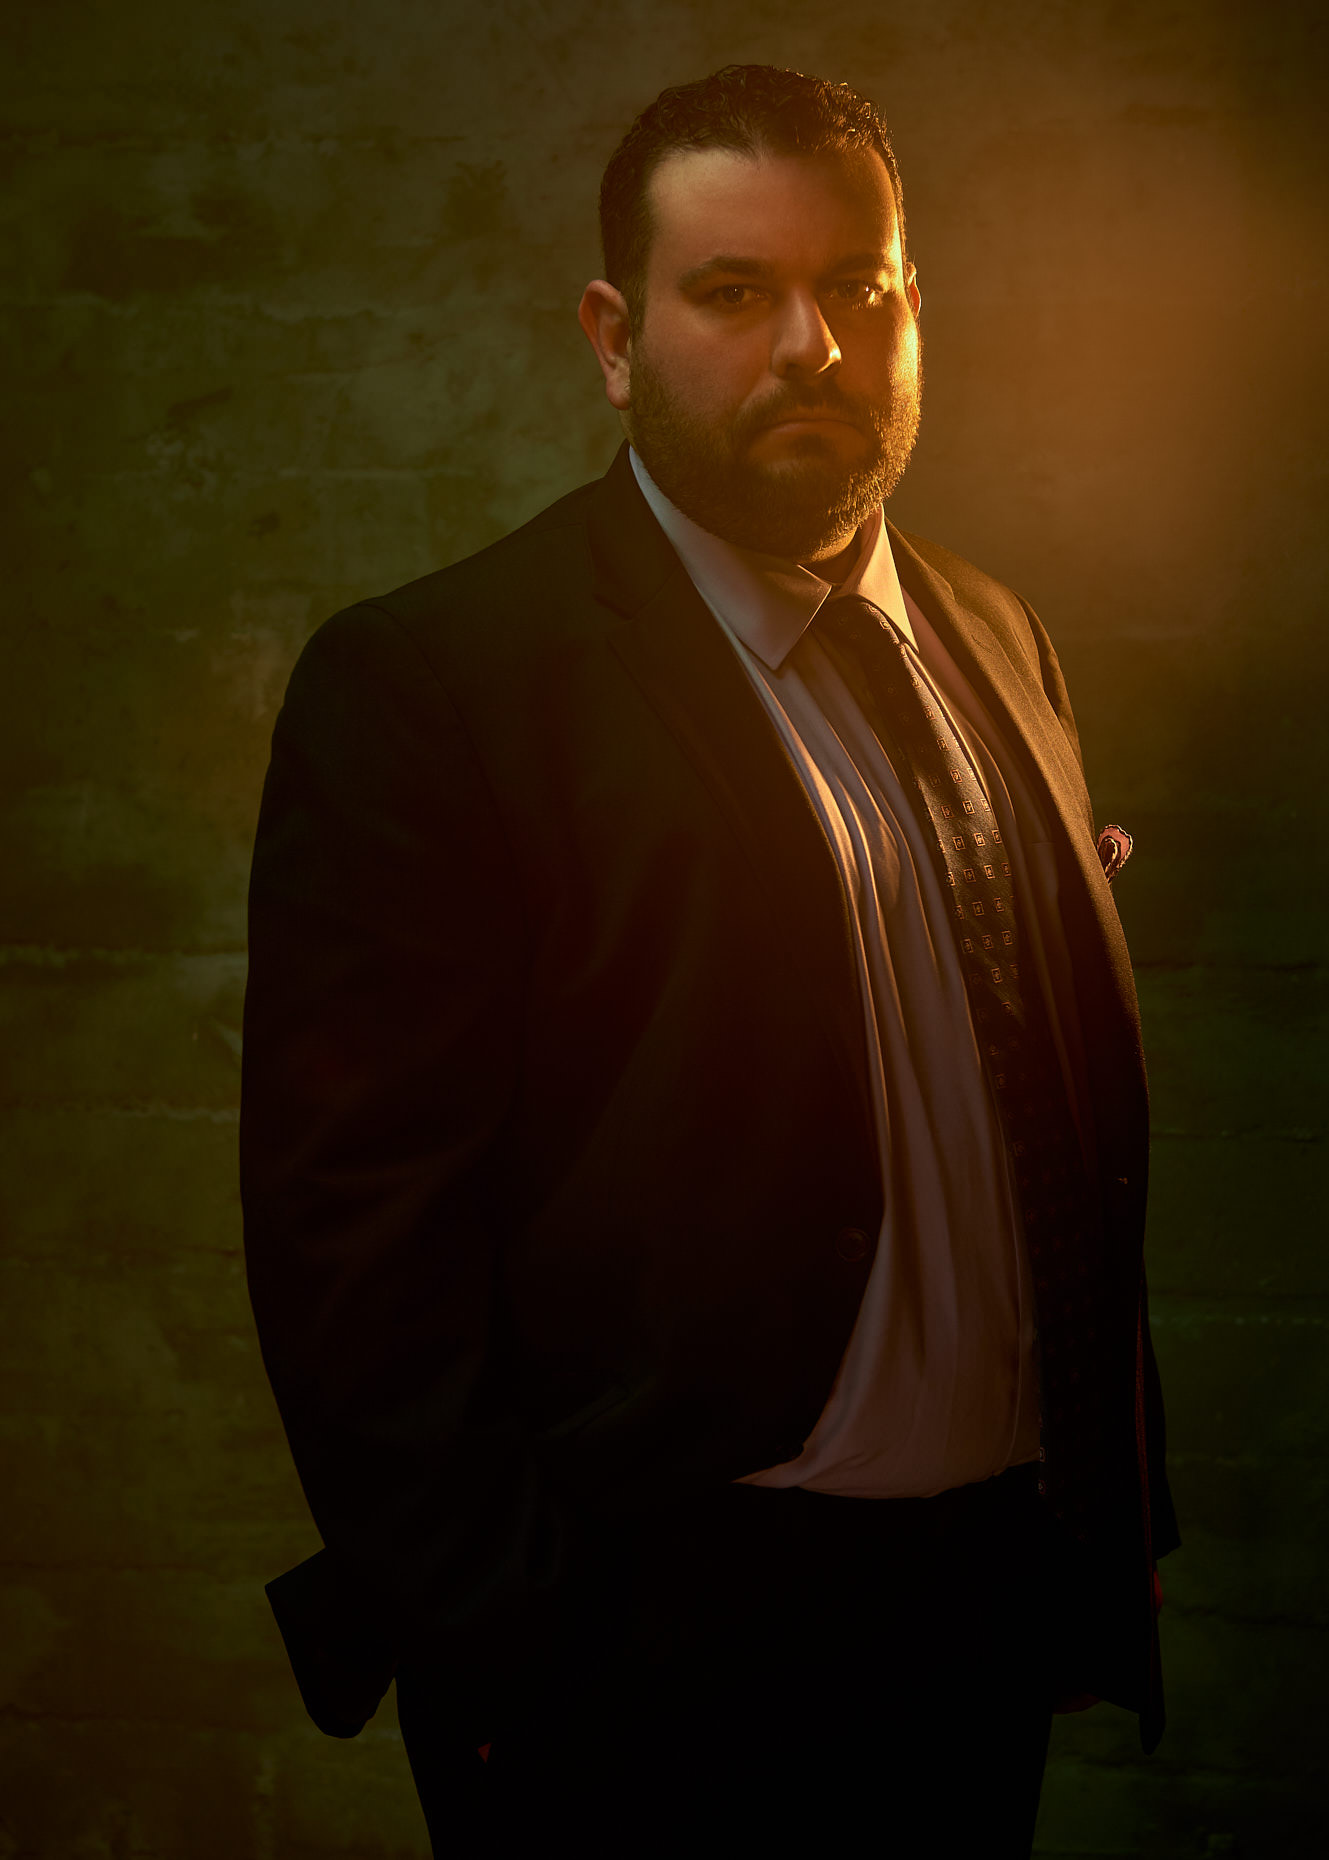 Jason Tracy - Portrait Photographer Kansas City - Actor Daniel Pico for the 333 Project